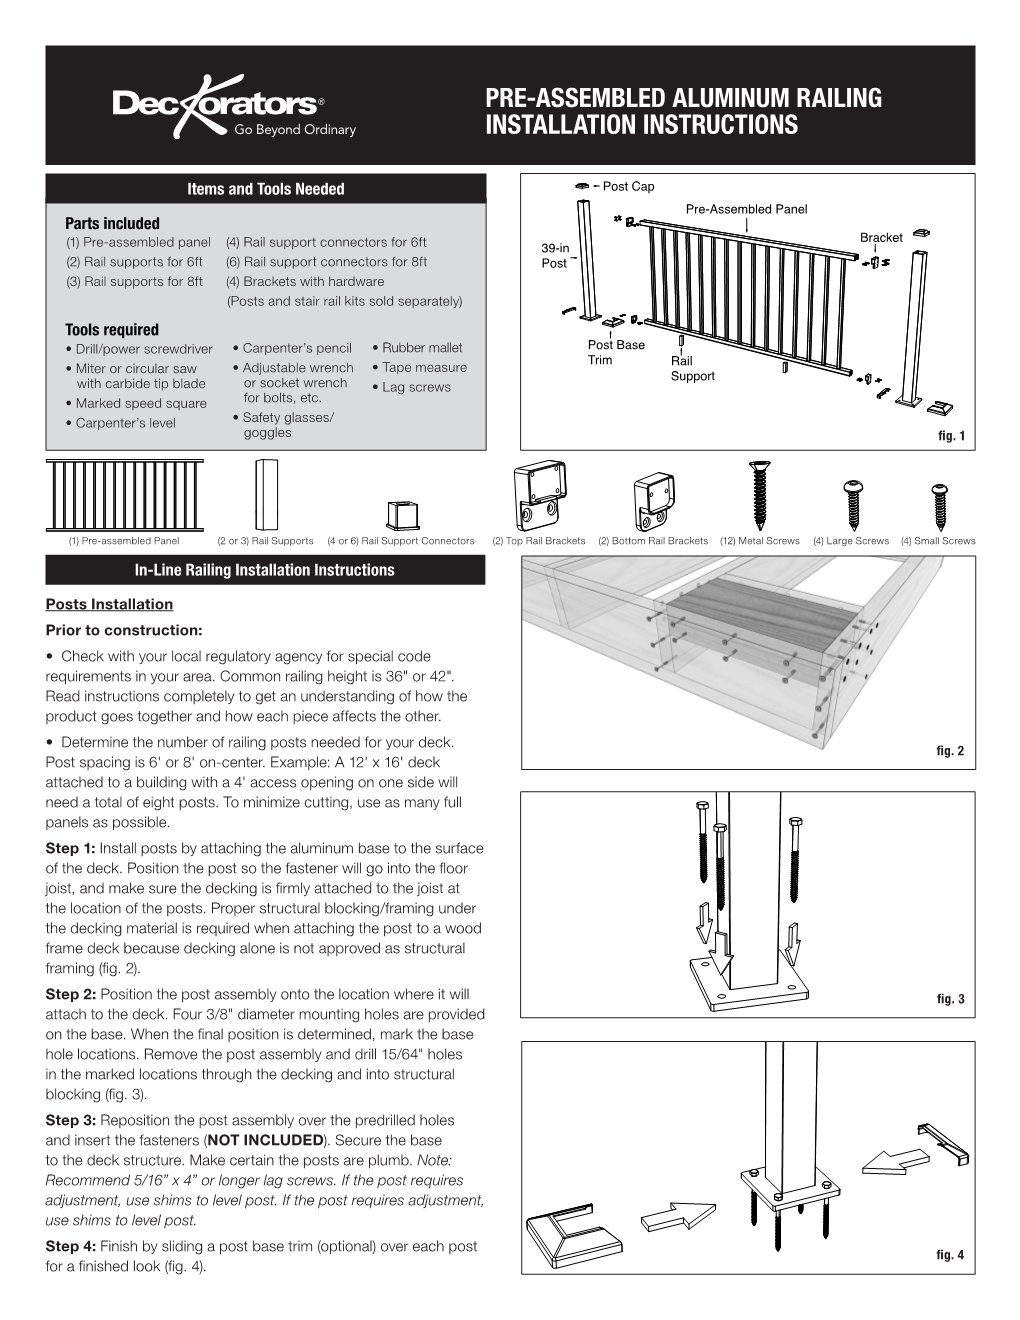 Pre-Assembled Aluminum Railing Installation Instructions